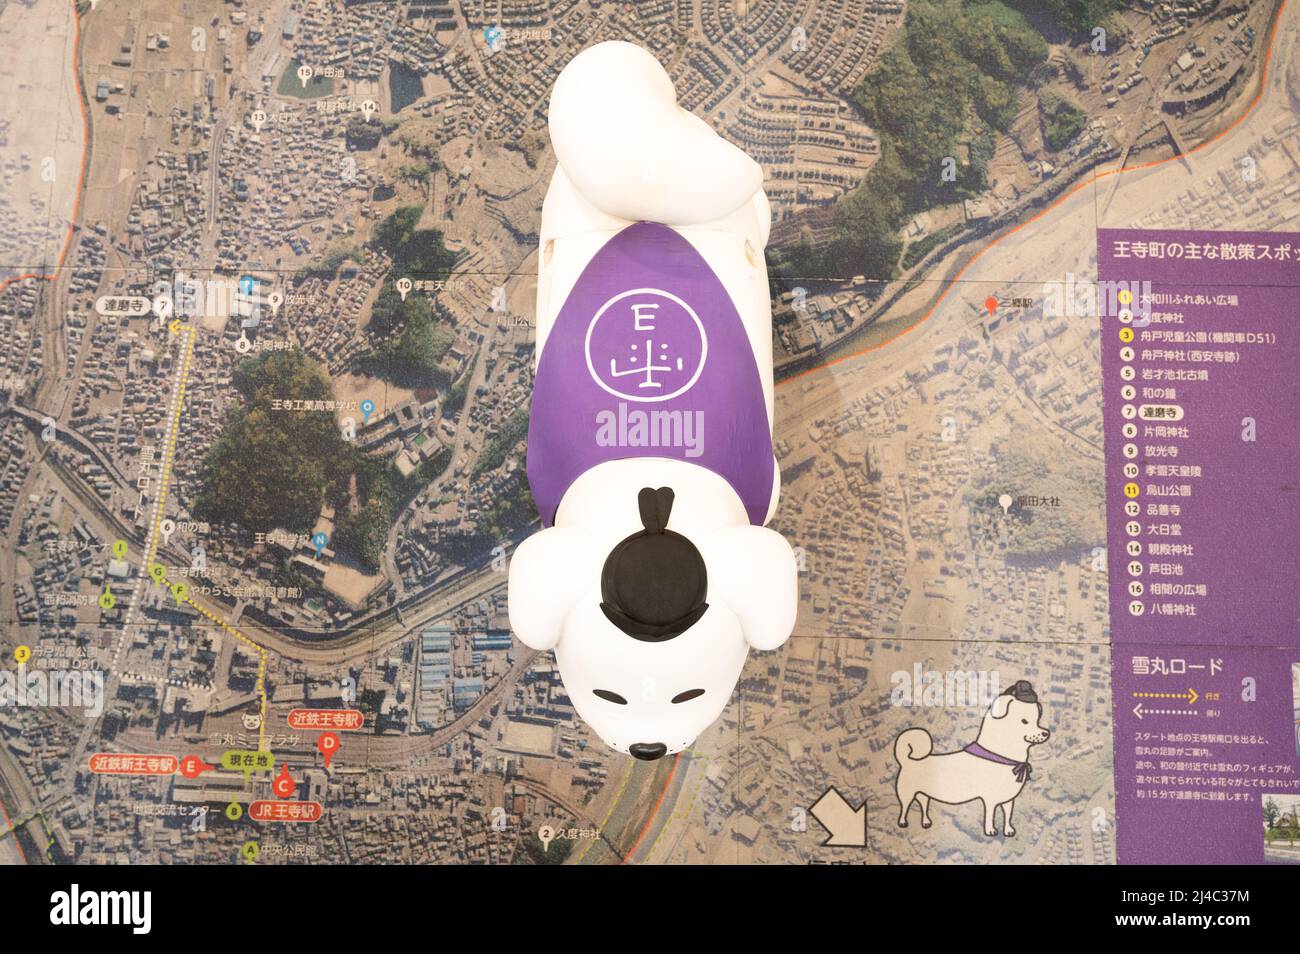 Flying drone mascot. Yukimaru dog character of Oji Town in Nara Prefecture, Japan. Stock Photo